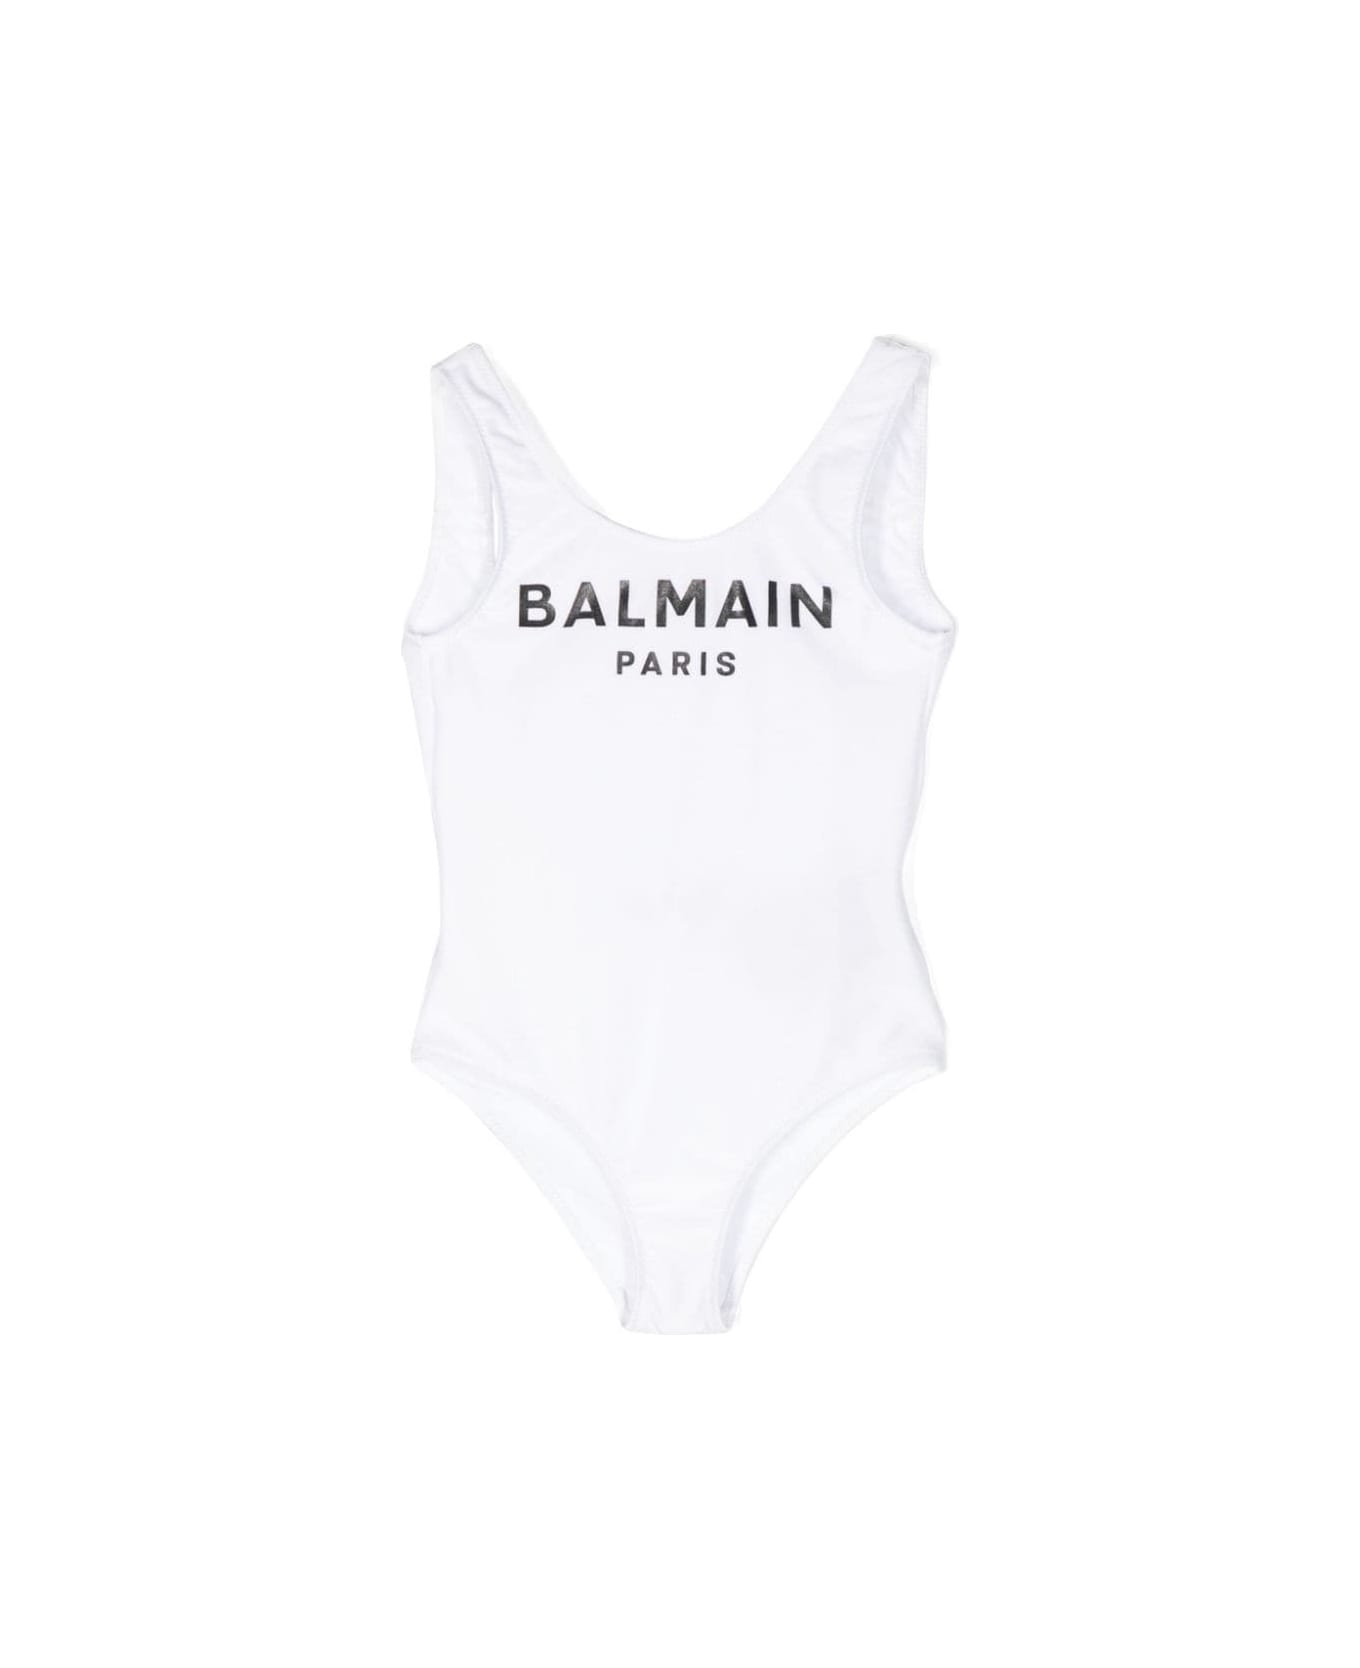 Balmain One-piece Swimsuit With Print - White